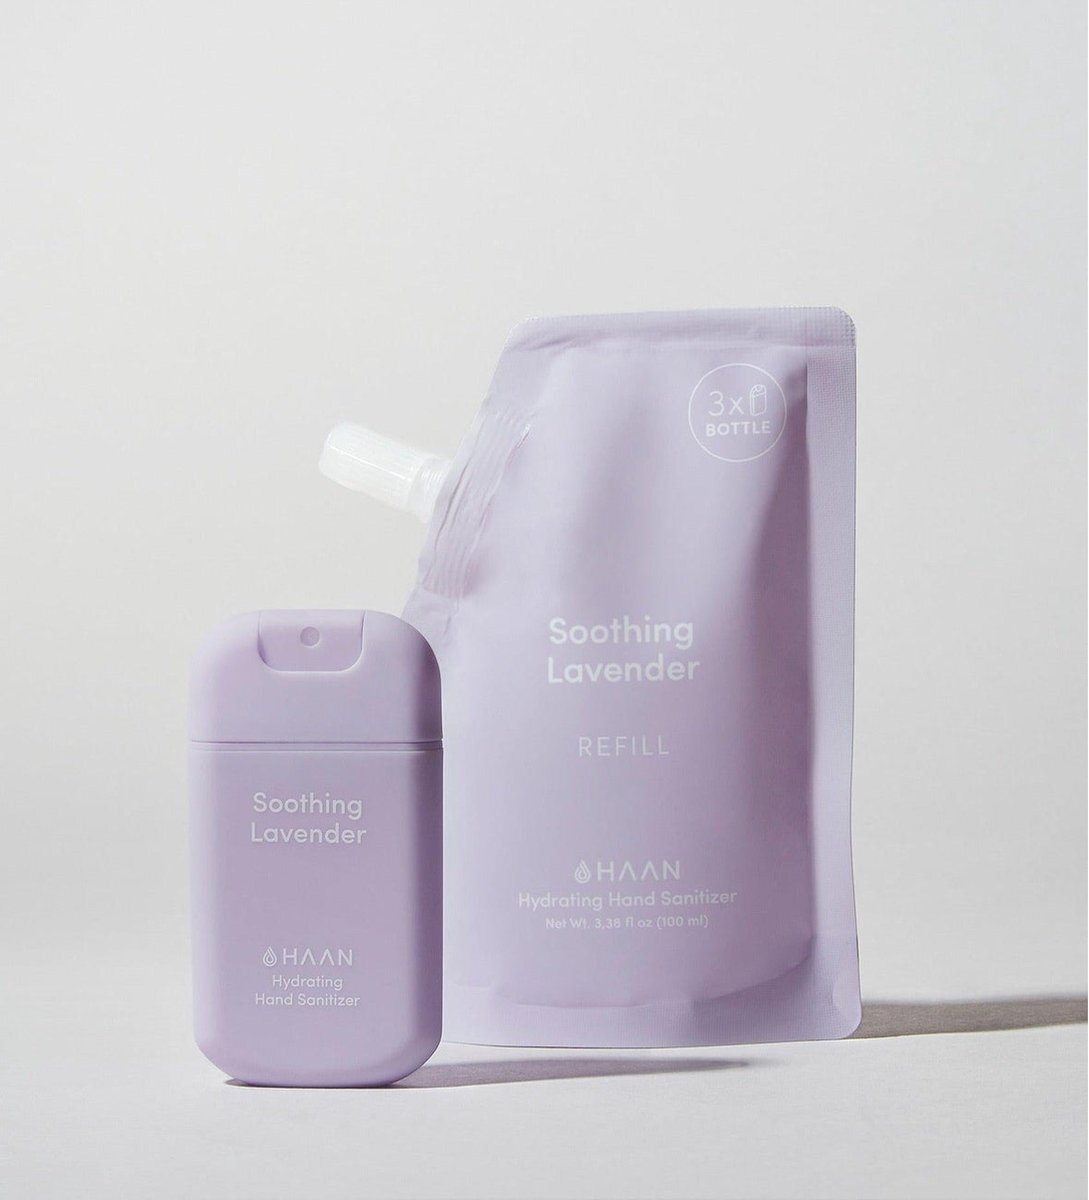 Haan Hand Sanitizer Soothing Lavender 30ml & Refill Pack 100ml - Handspray - Navulling - Navulzak - Set van 2